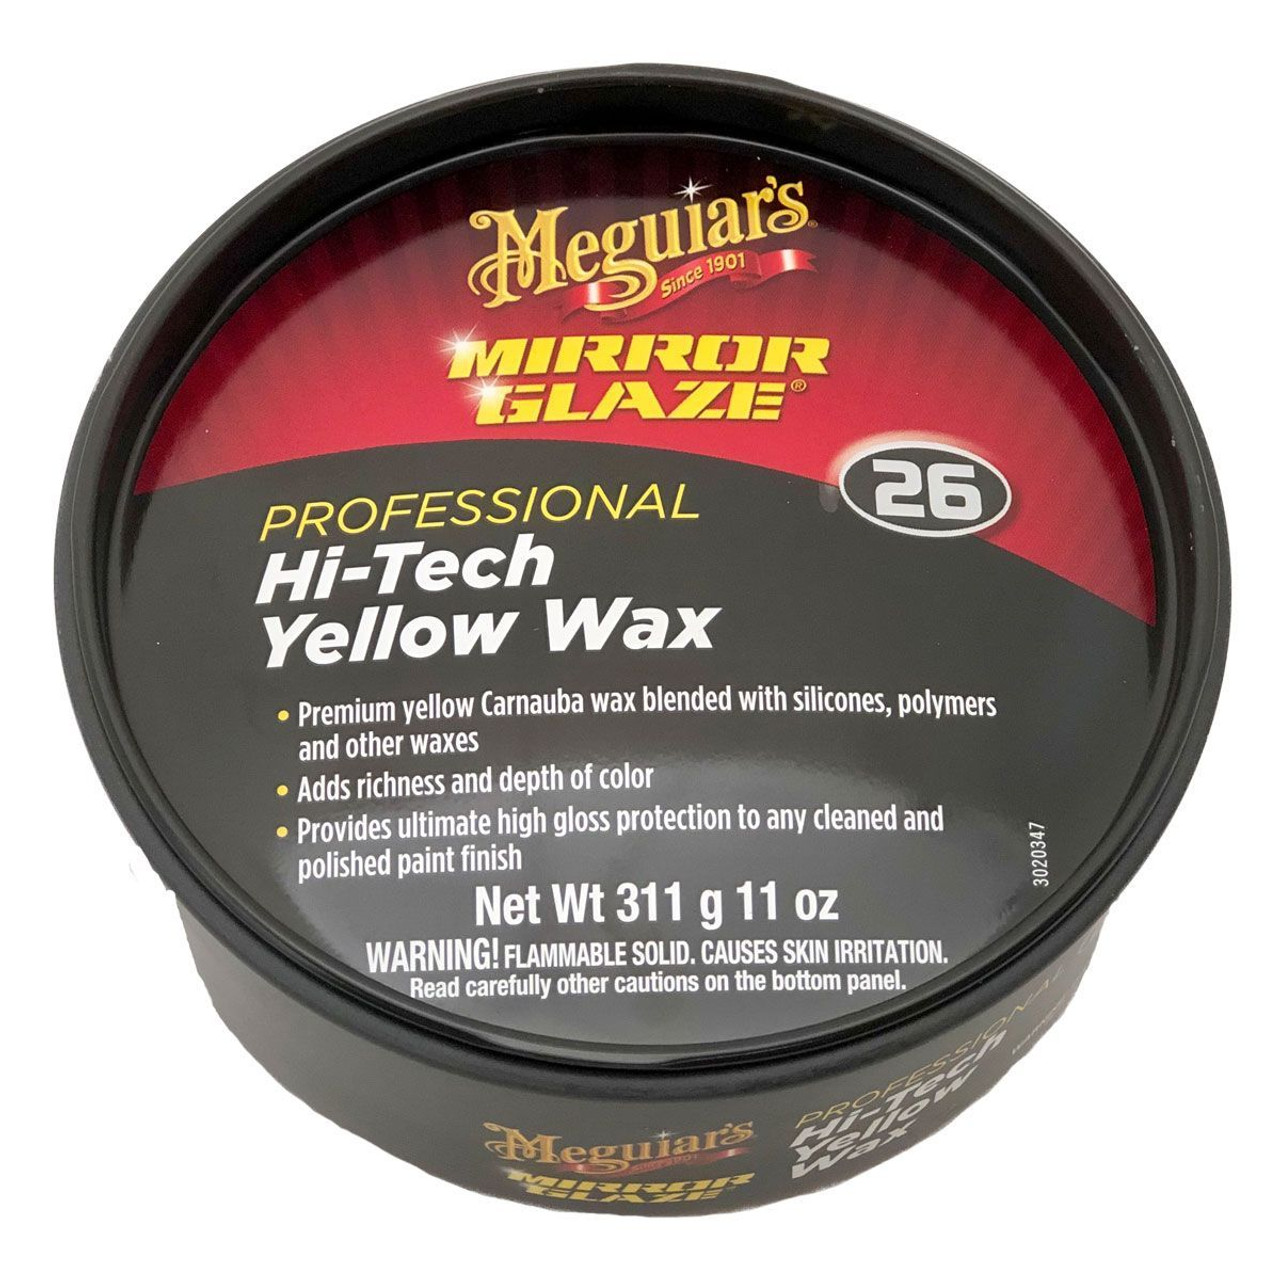 Meguiars Mirror Glaze Cera Profissional Paste Wax, M1611 (…